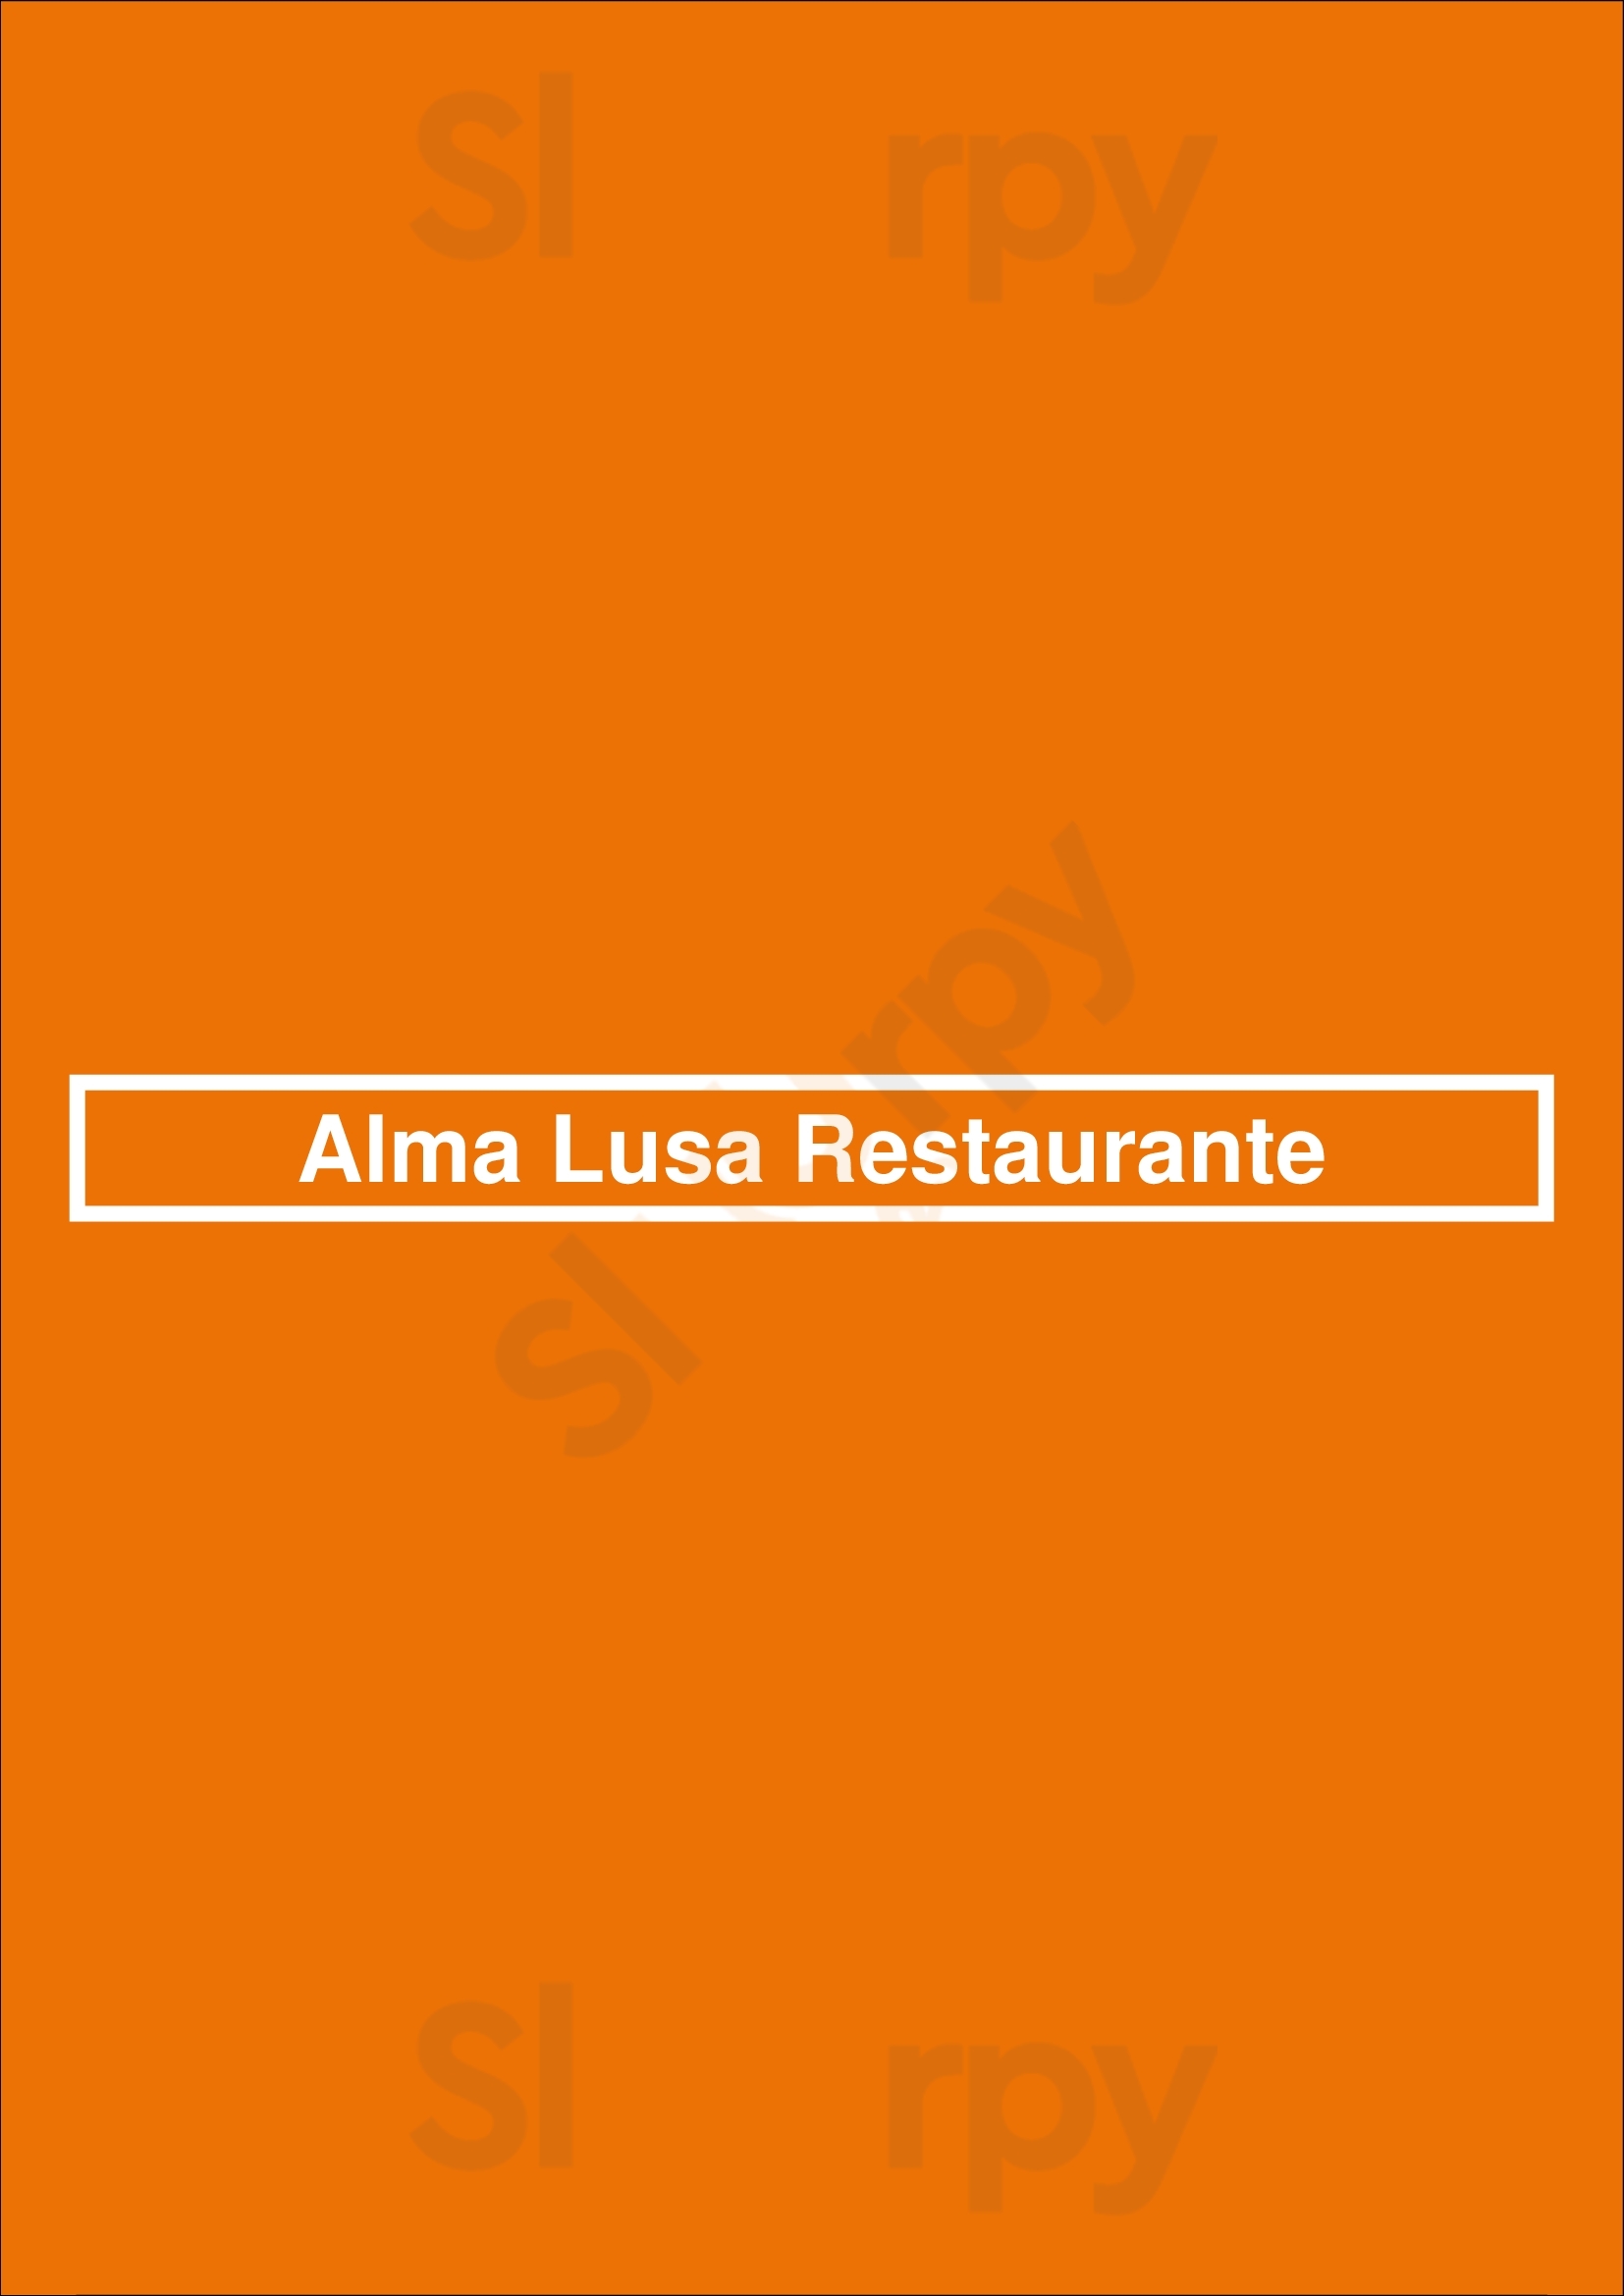 Alma Lusa Restaurante Lisboa Menu - 1